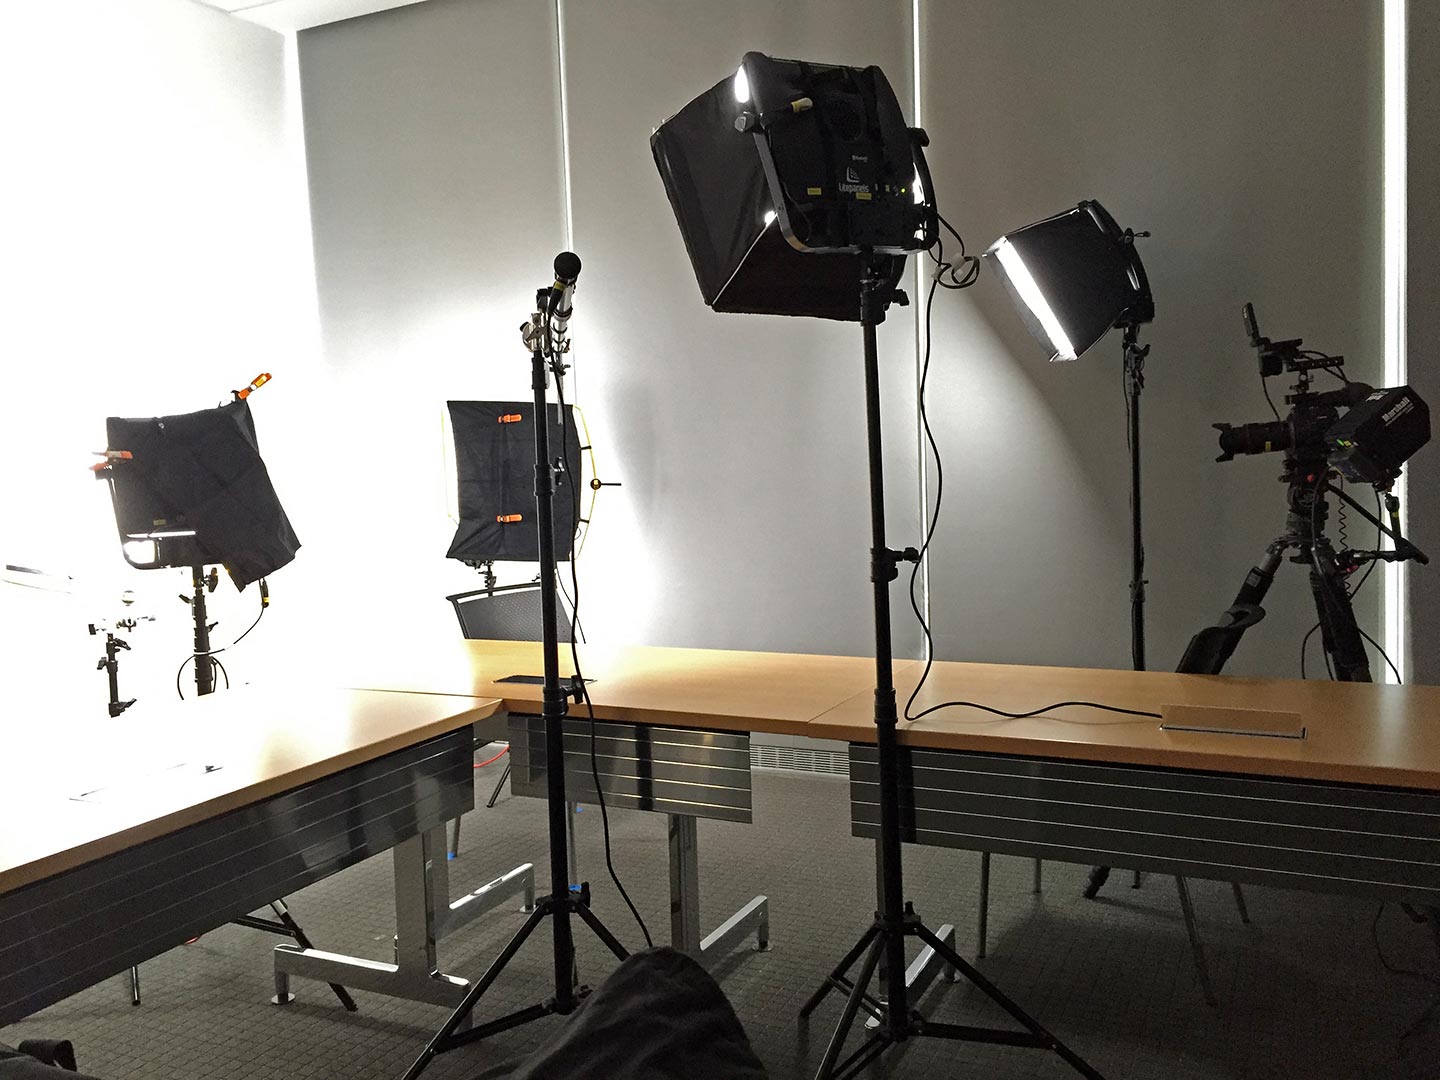 Overall lighting setup, professor & student interviews. New York City. November, 2015.